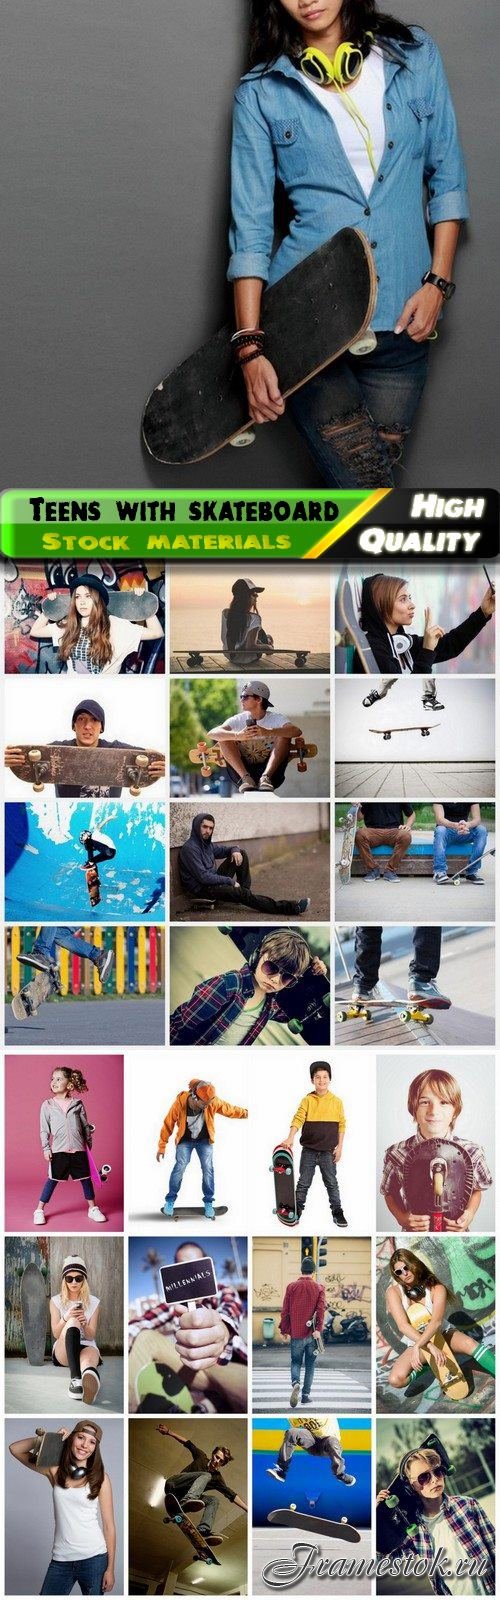 Urban teens skate on skateboard - 25 HQ Jpg